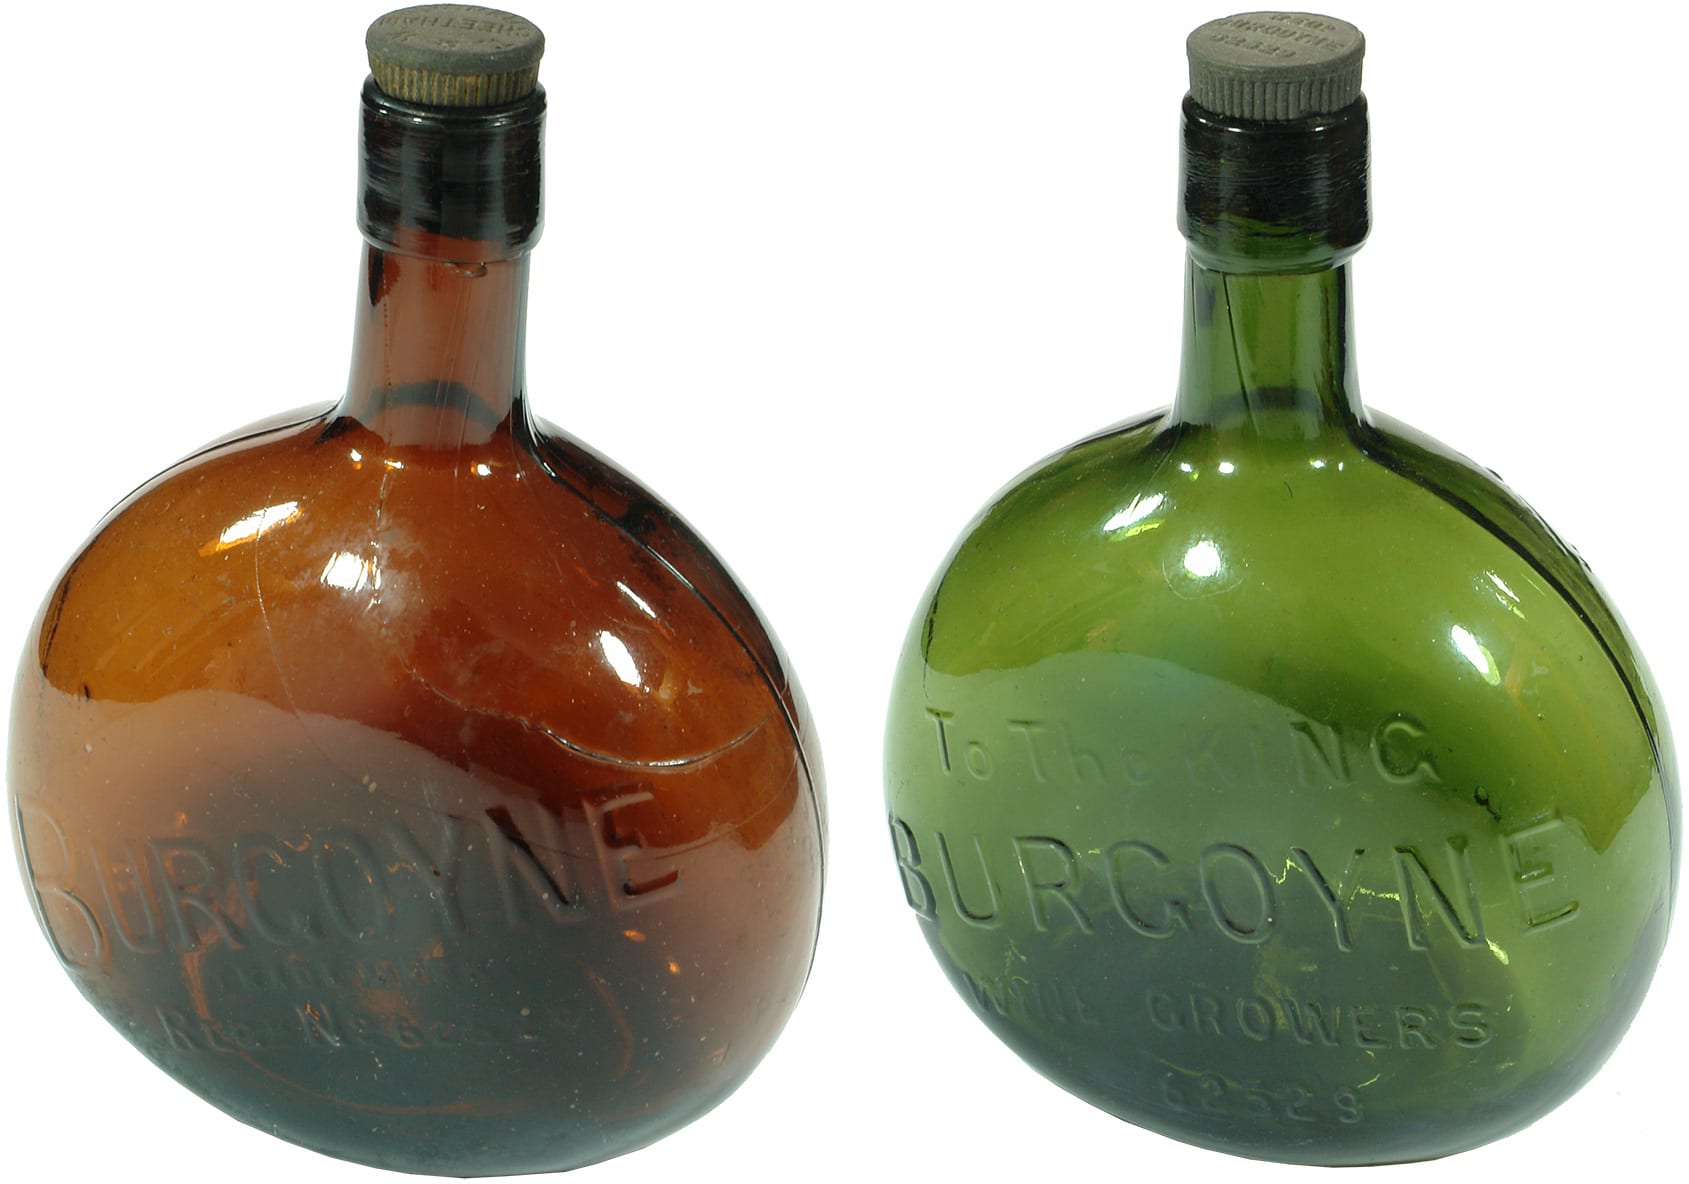 Burgoyne Wine Growers Chestnut Shape Wine Bottles